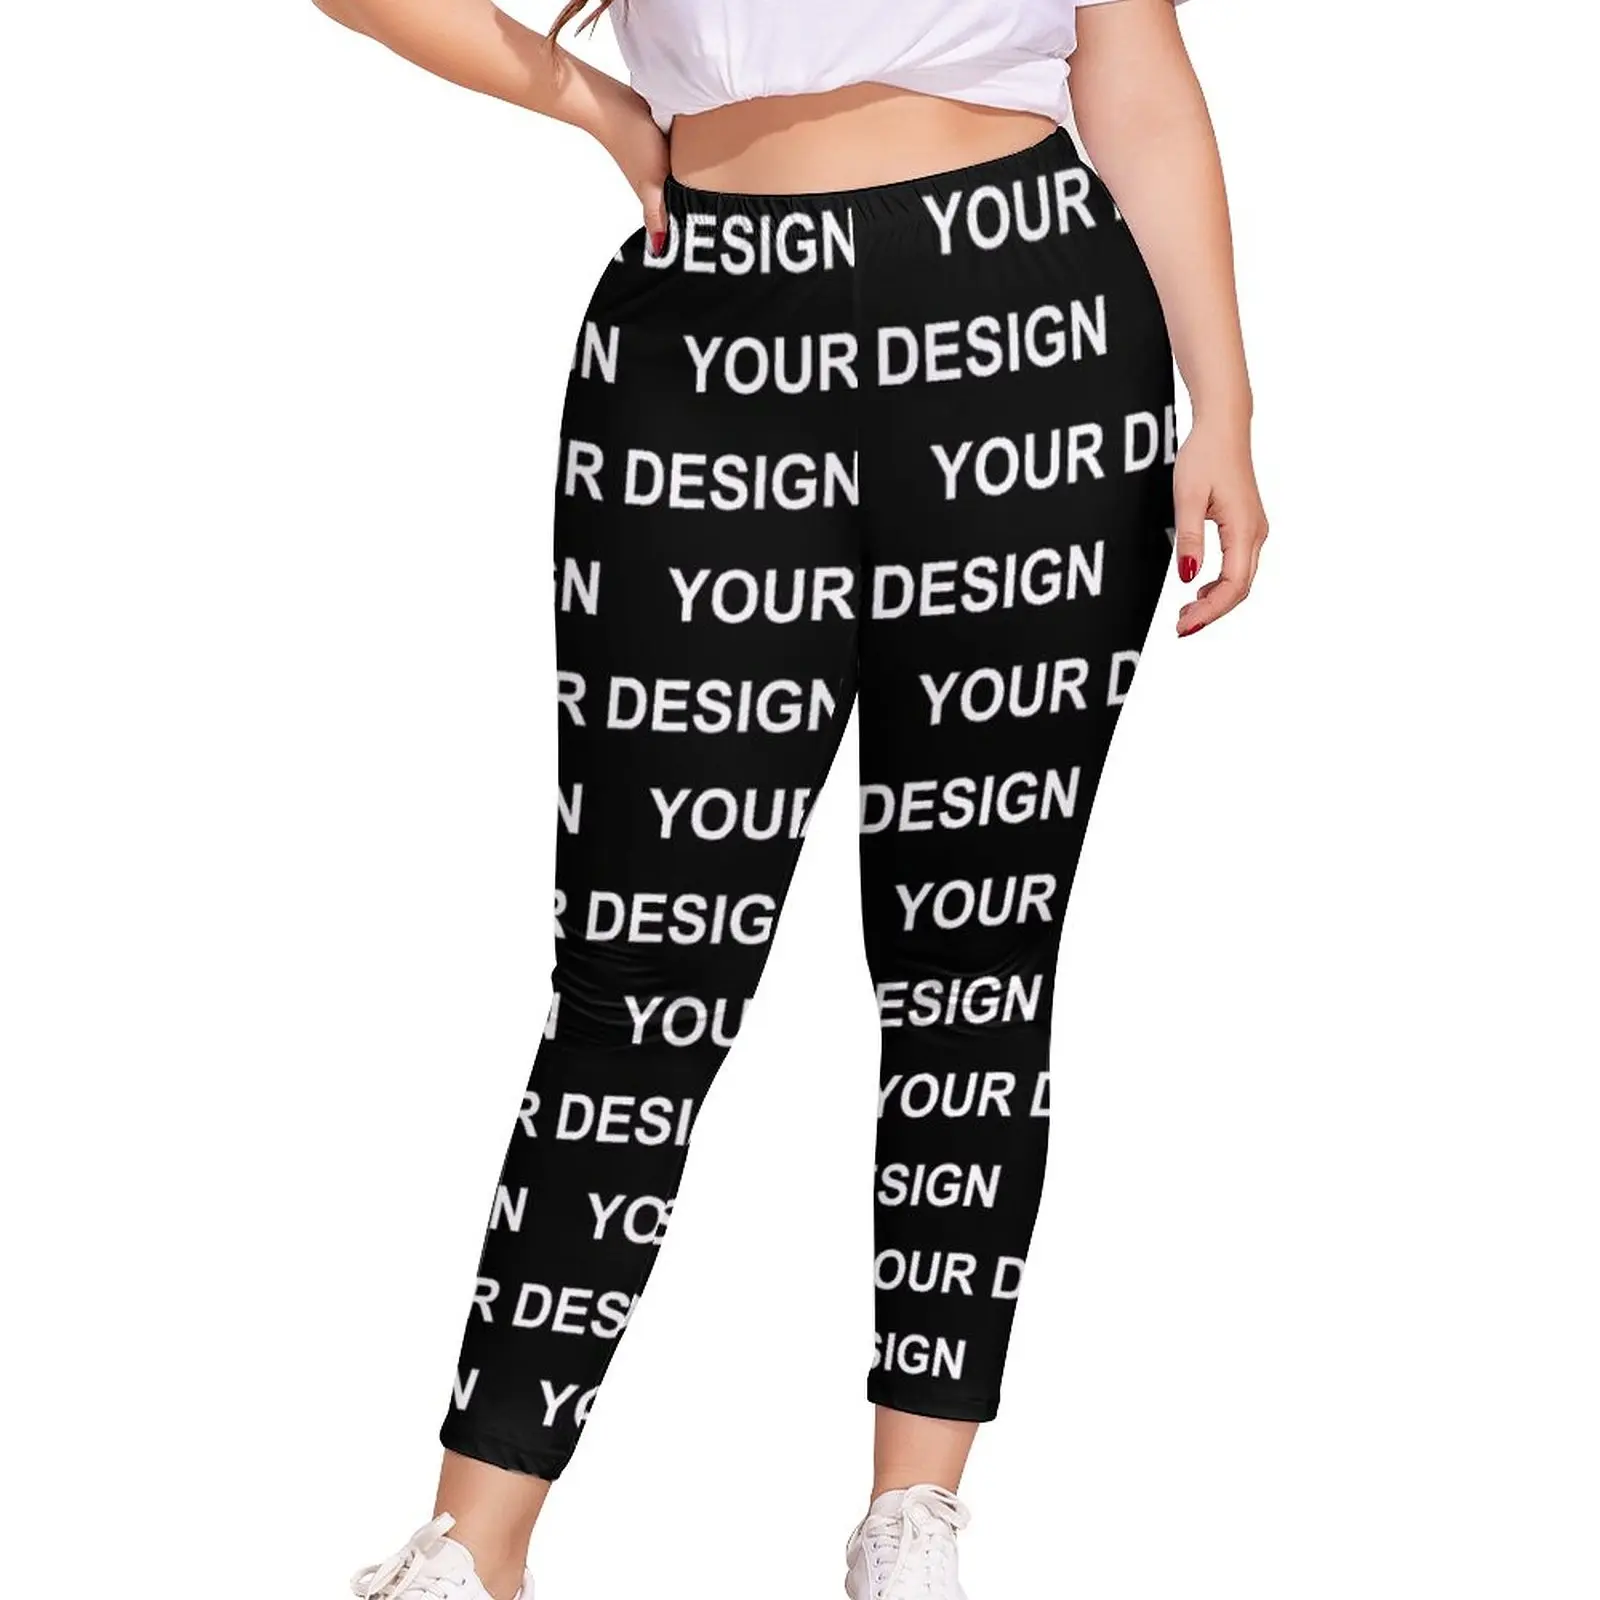 Add Design Customized Leggings Custom Made Your Image Hight Waist Leggins Novelty Leggings Street Print Pants Large Size 3XL 4XL